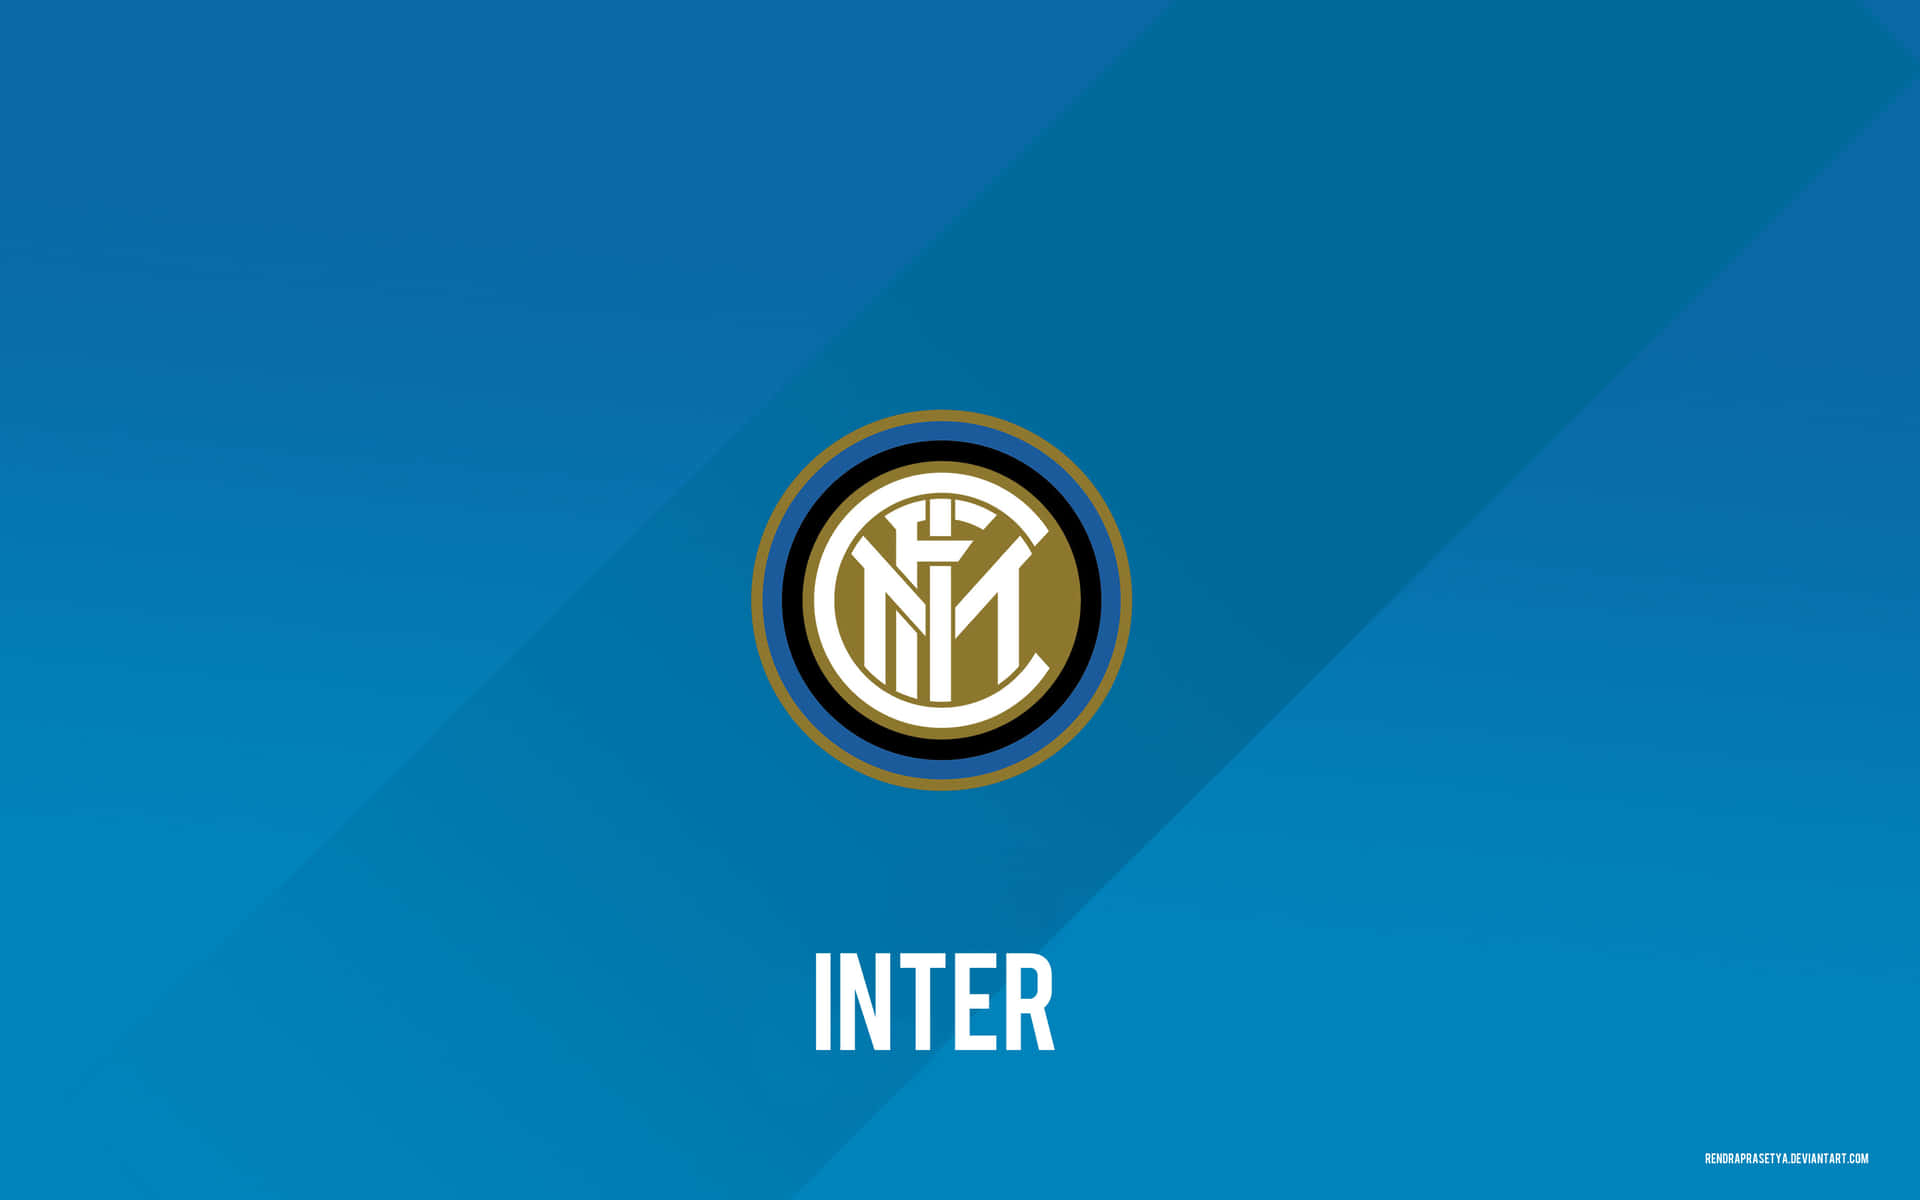 Intermediate Team Club Logo Wallpaper